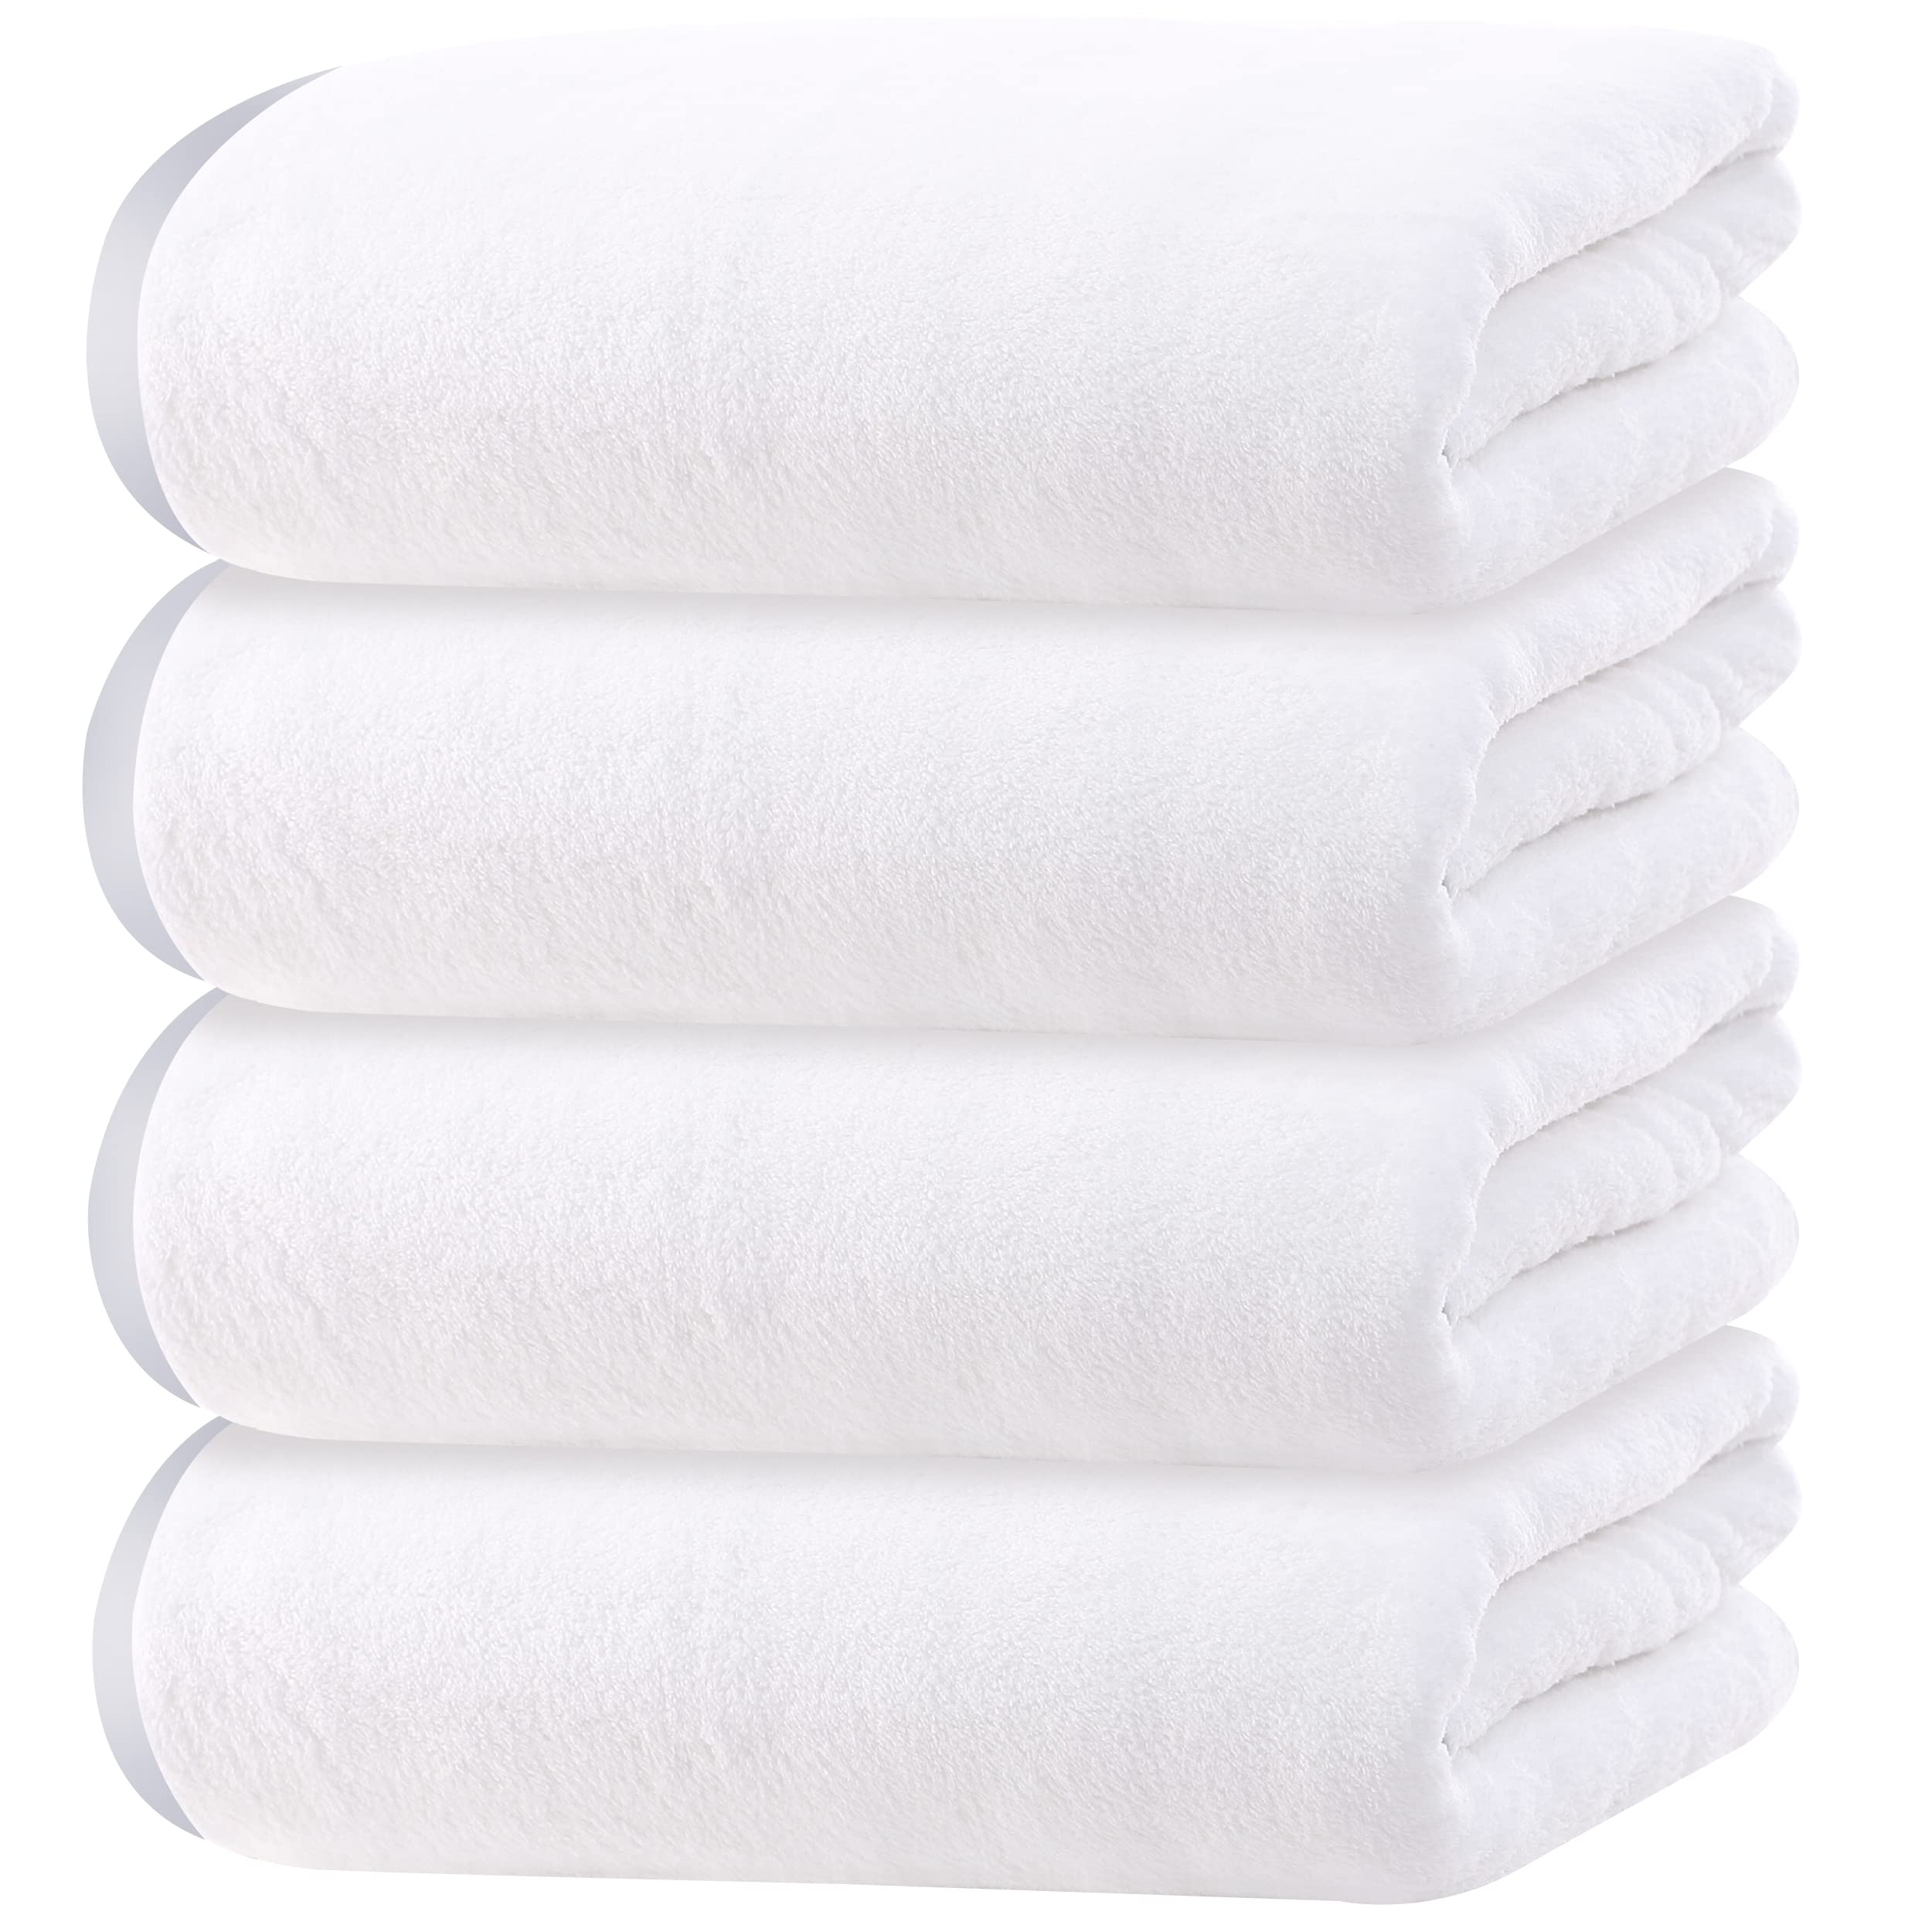  White Bath Towels for Bathroom, 4 Pack Bath Towel Set